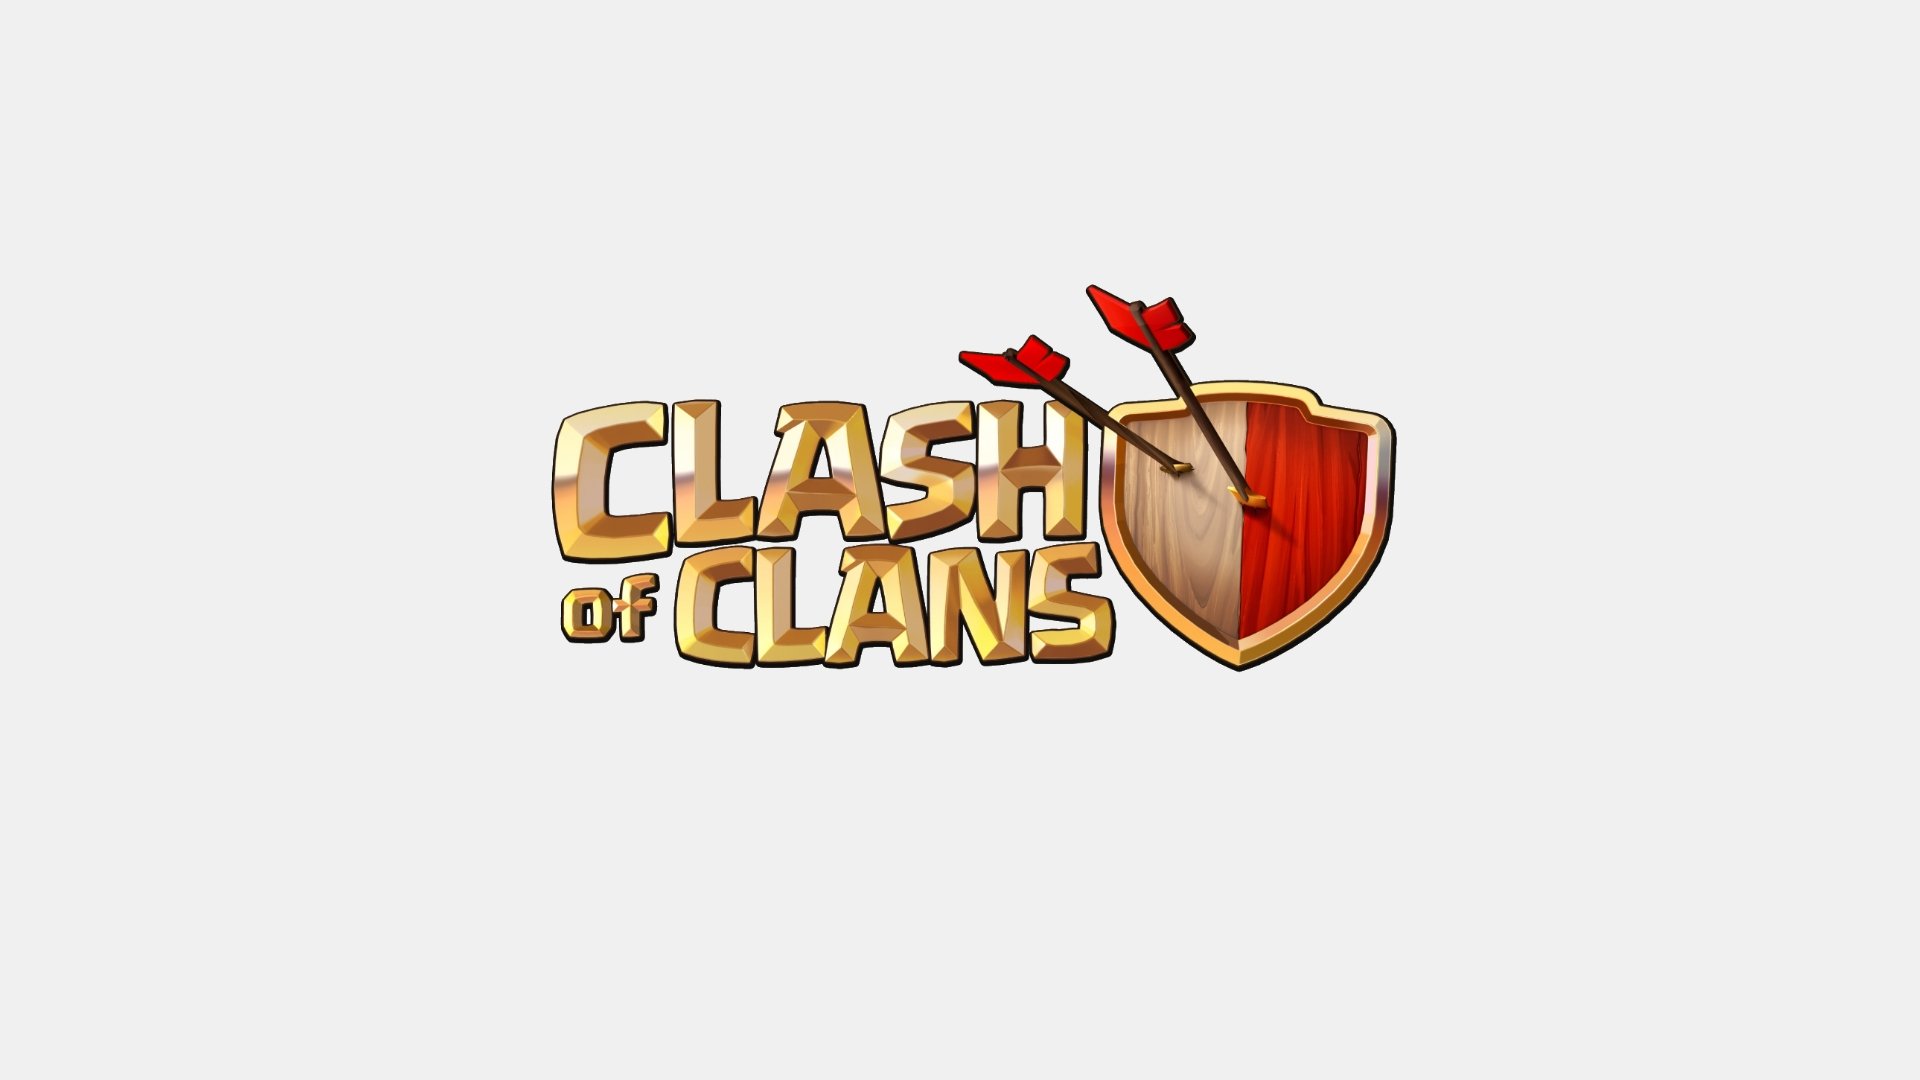 Clans clans com. Клеш оф кланс. Clash of Clans эмблема. Clash of Clans надпись. Иконка клэш оф кланс.